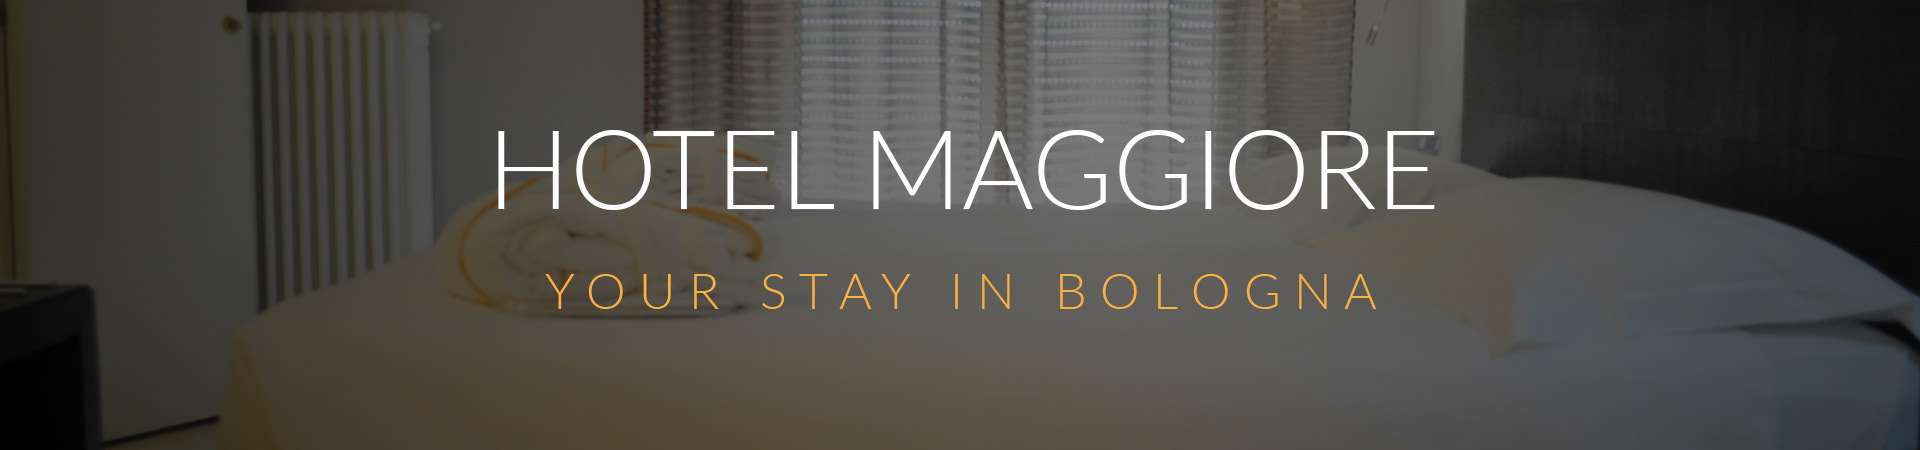 header hotel maggiore bologna en